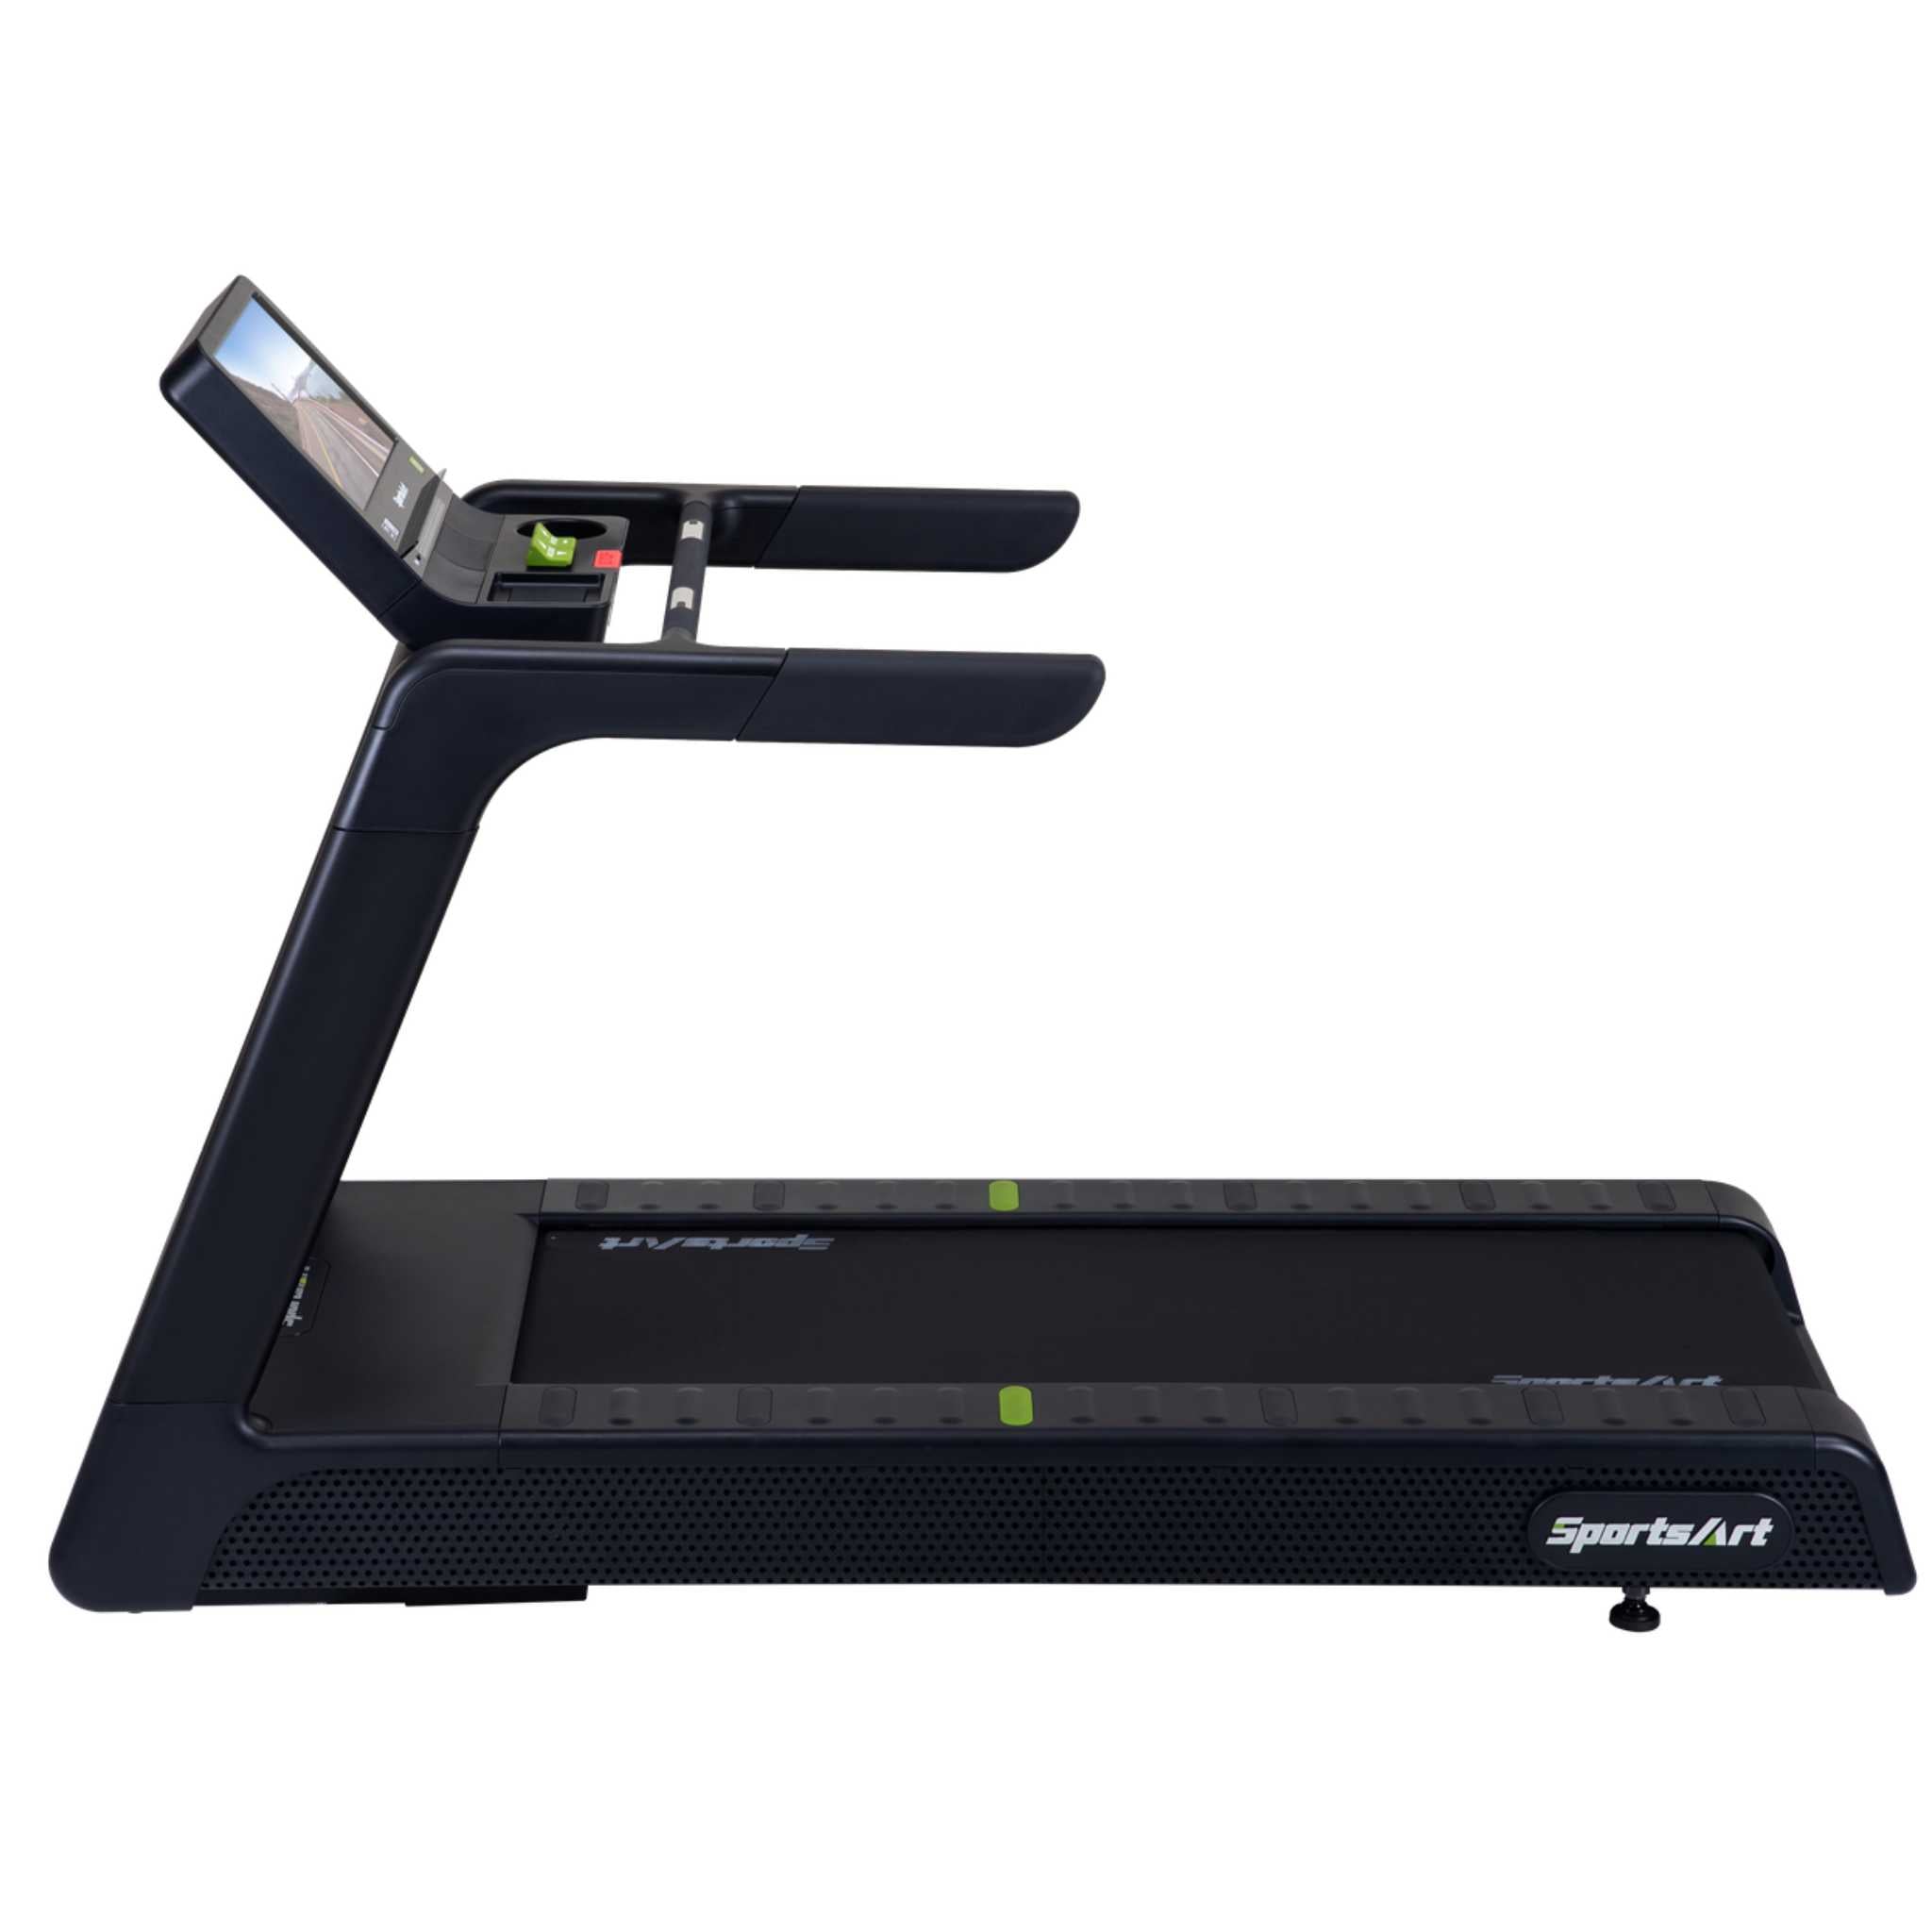 SportsArt T673L-16 Prime Senza Treadmill front view